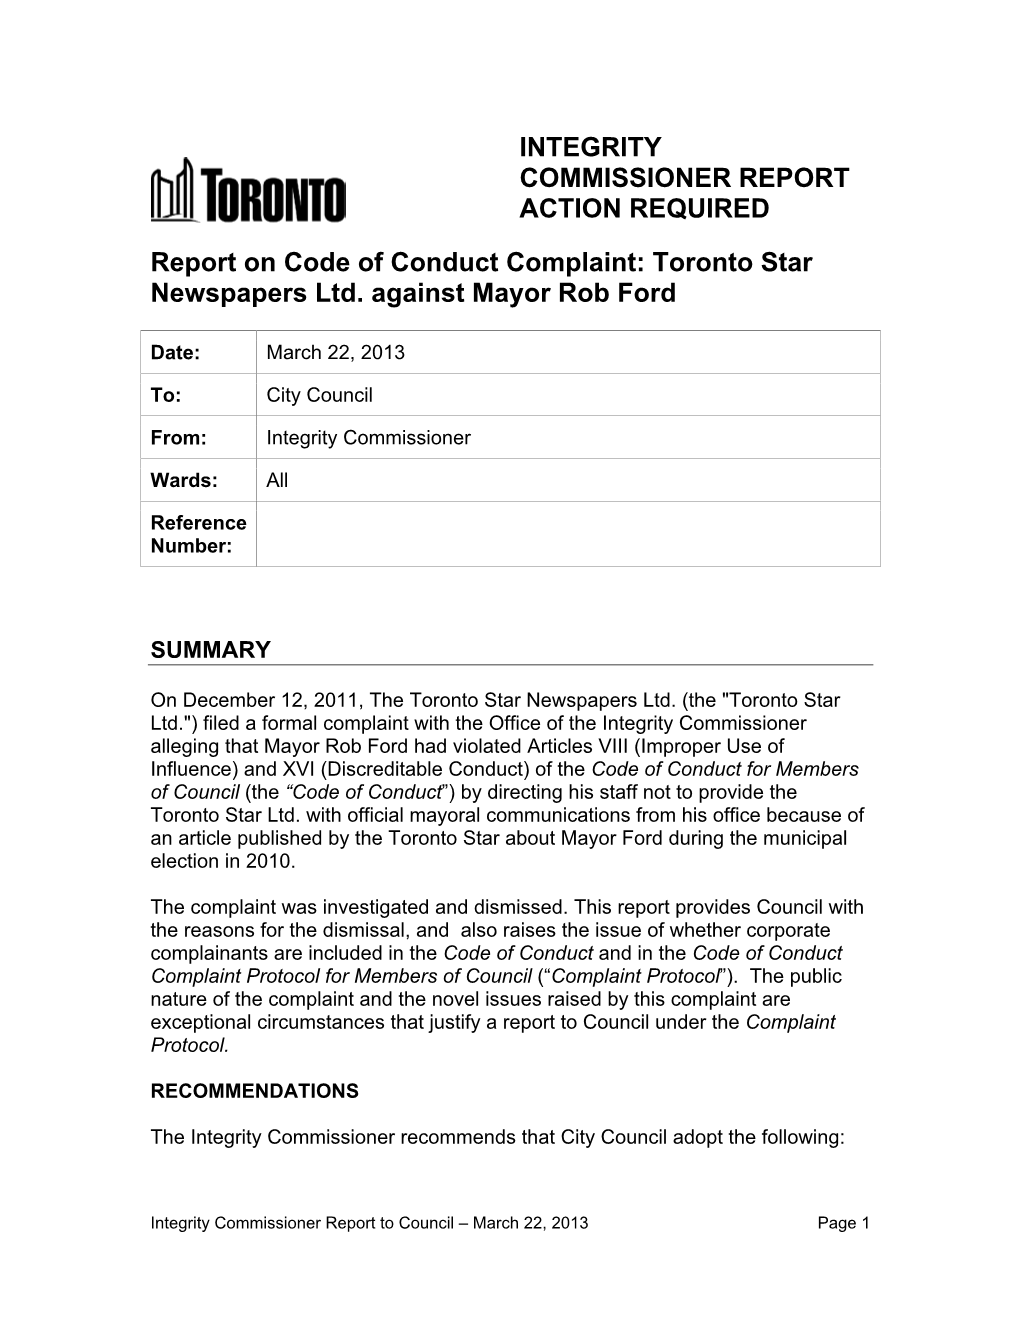 Toronto Star Newspapers Ltd. Against Mayor Rob Ford